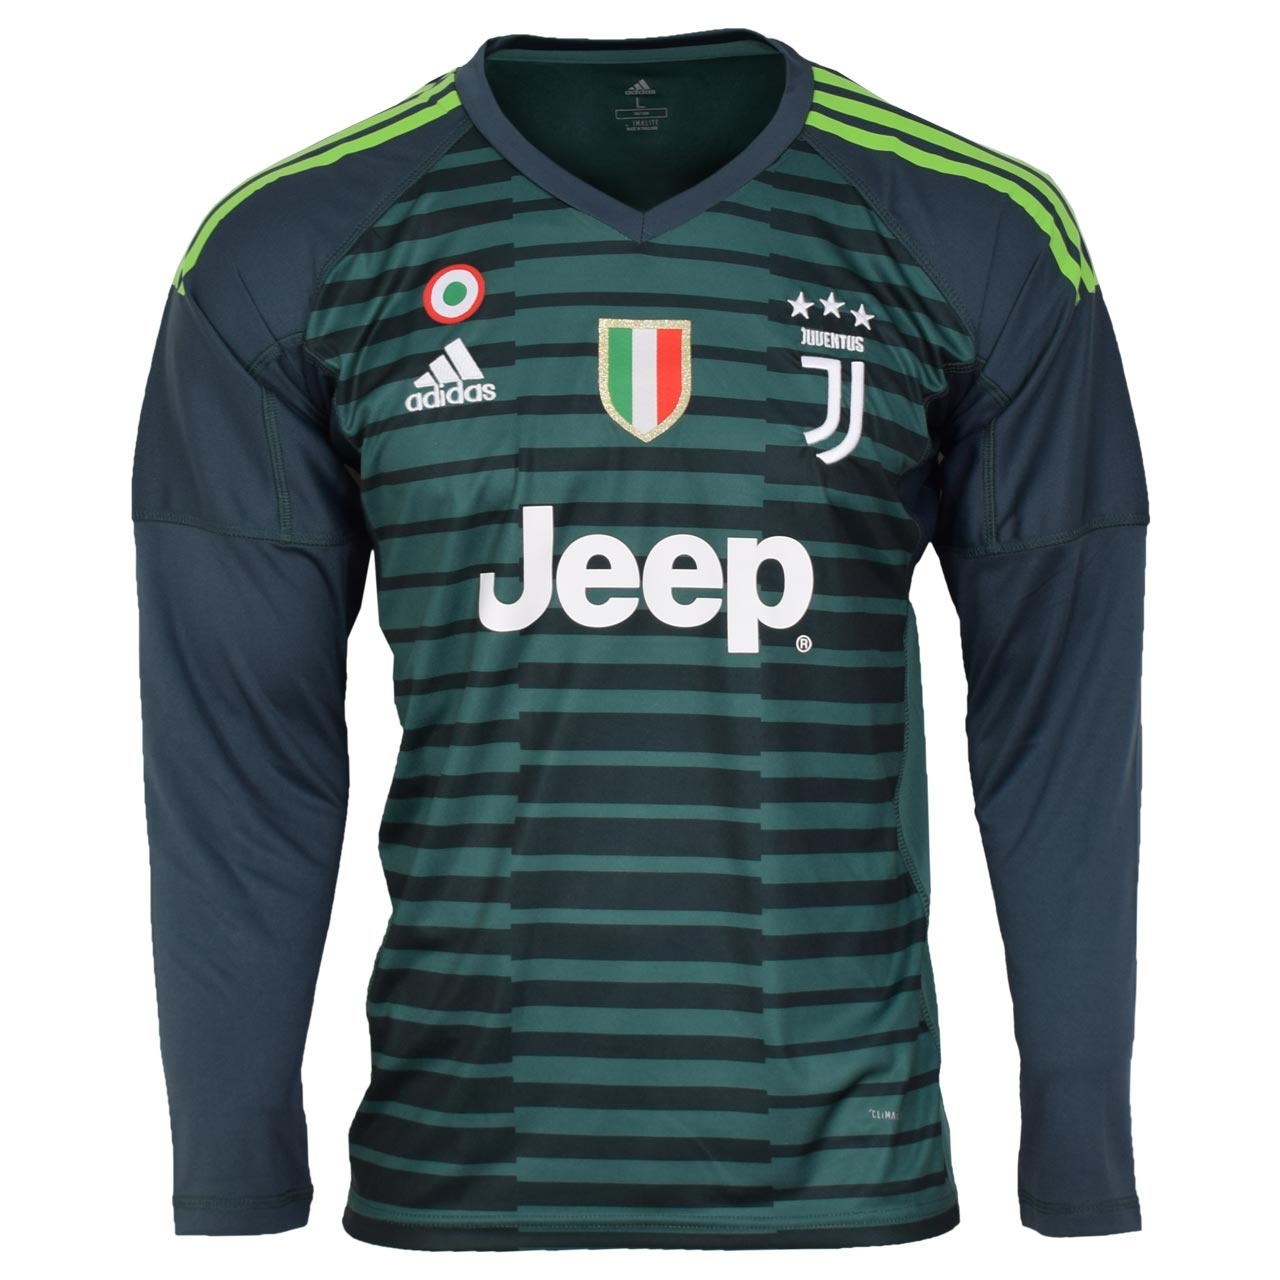 پیراهن ورزشی مردانه طرح یوونتوس کد goalkeeper/19 رنگ سبز